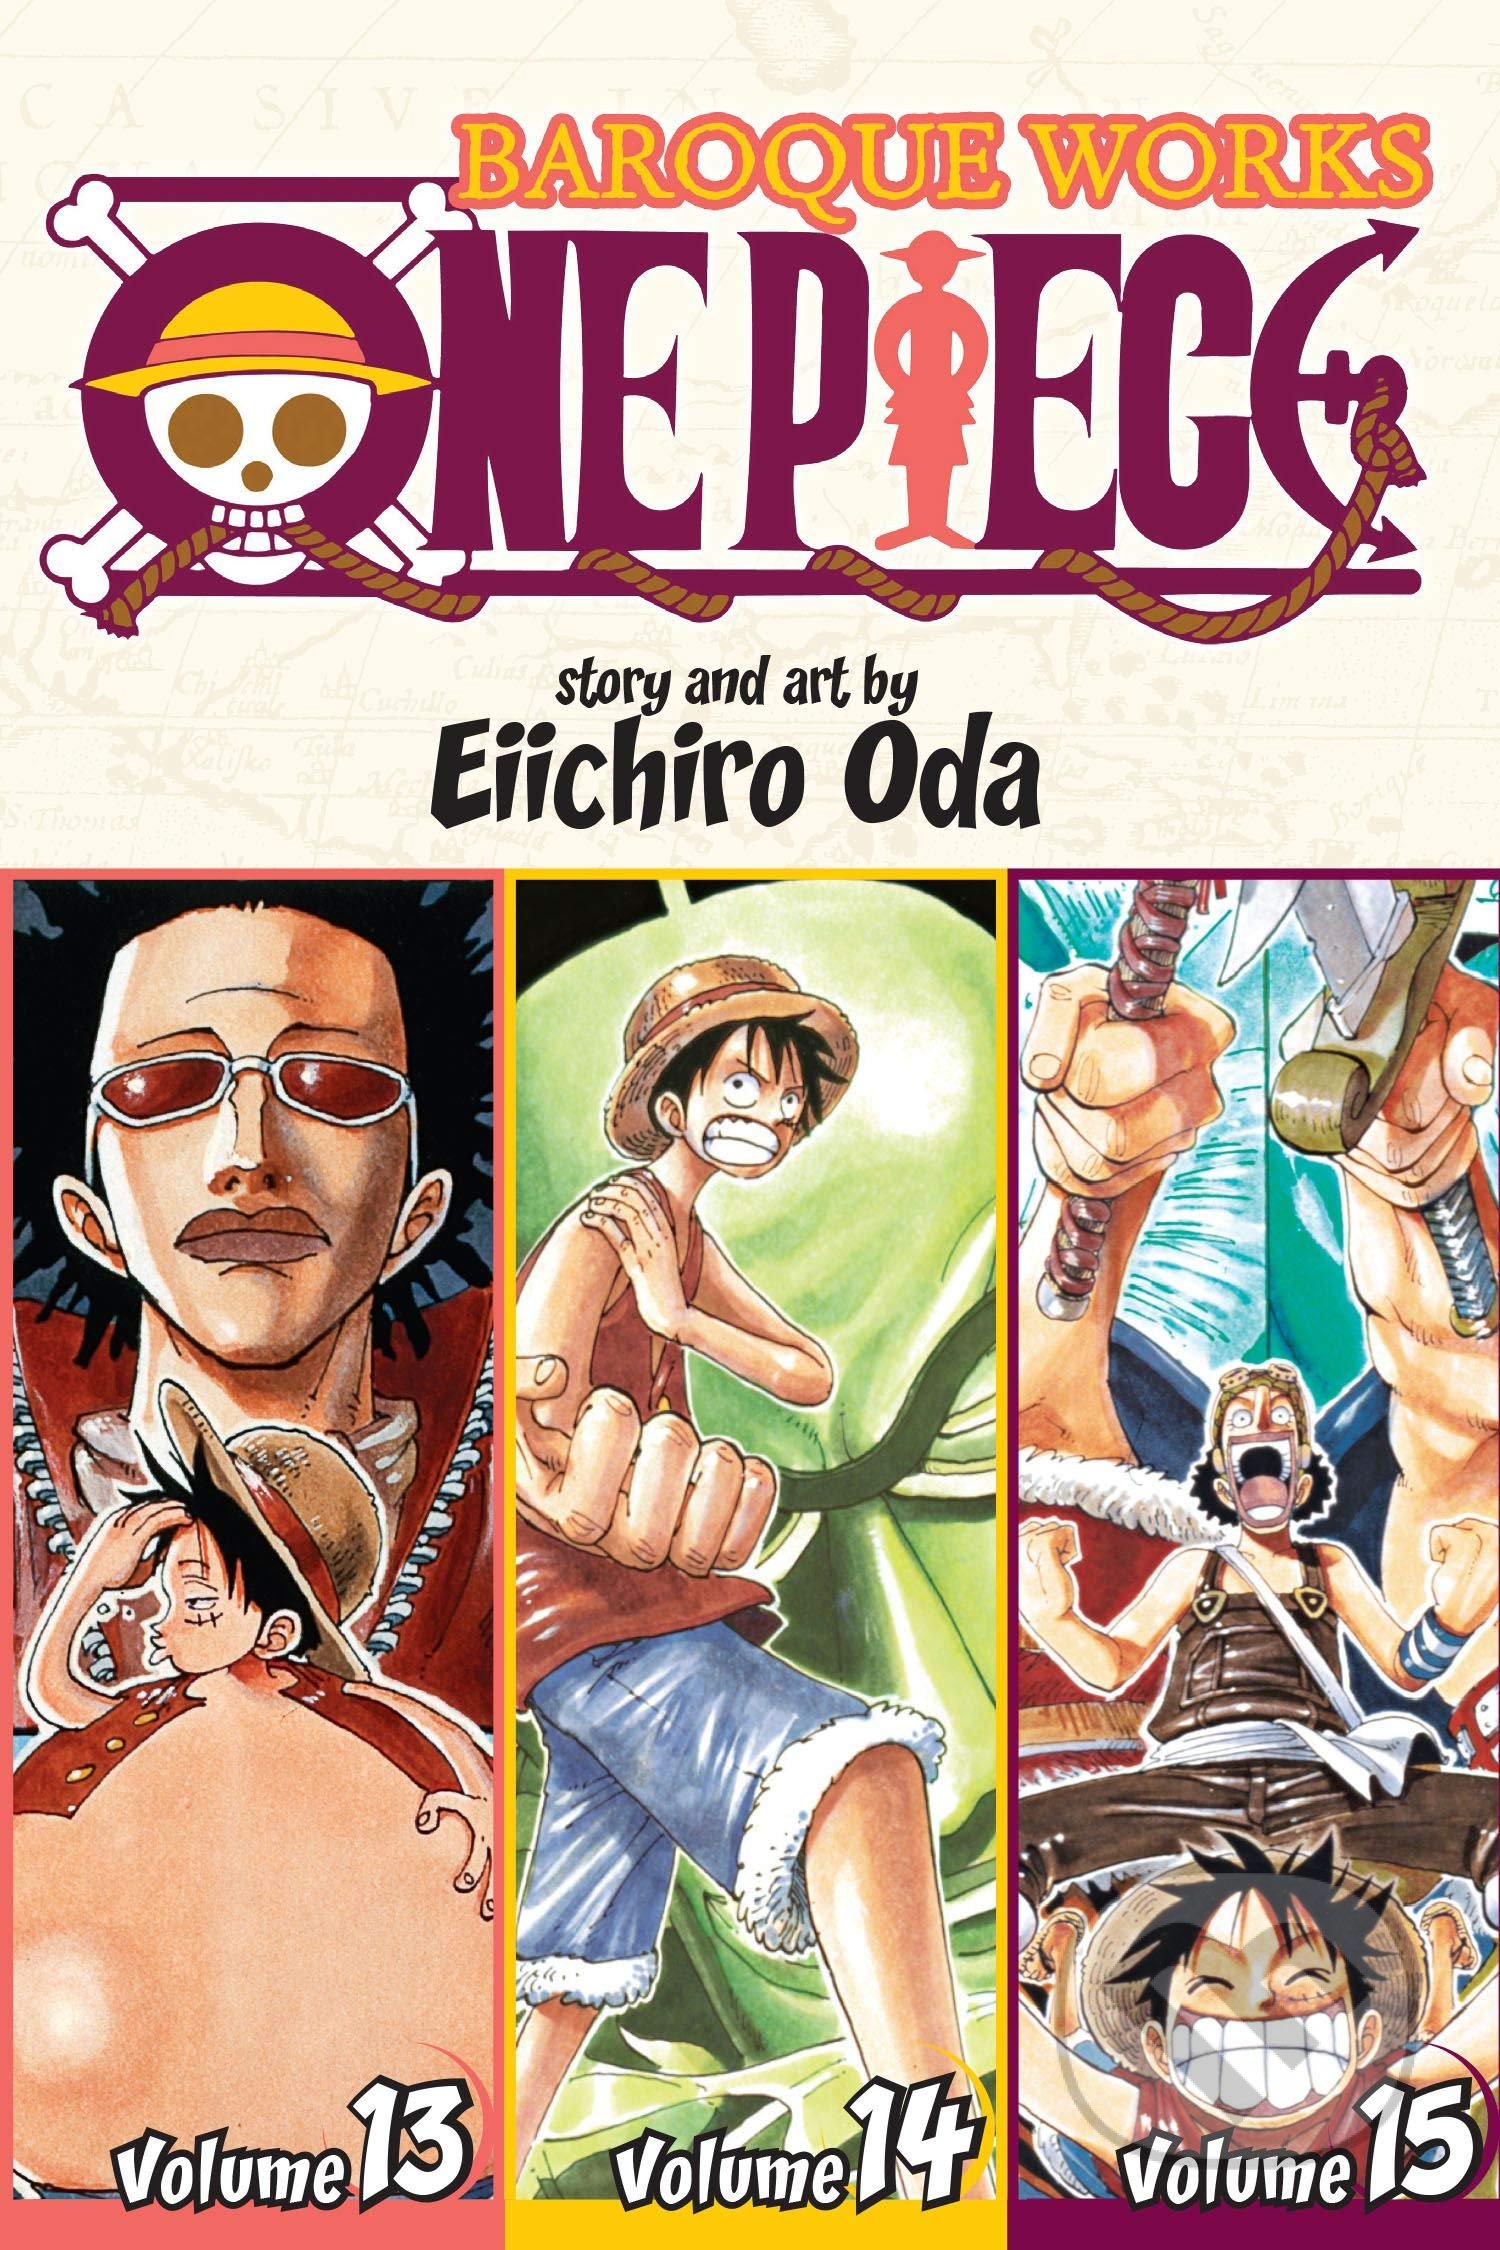 One Piece Volume 13, 14, 15 - Eiichiro Oda, Viz Media, 2013